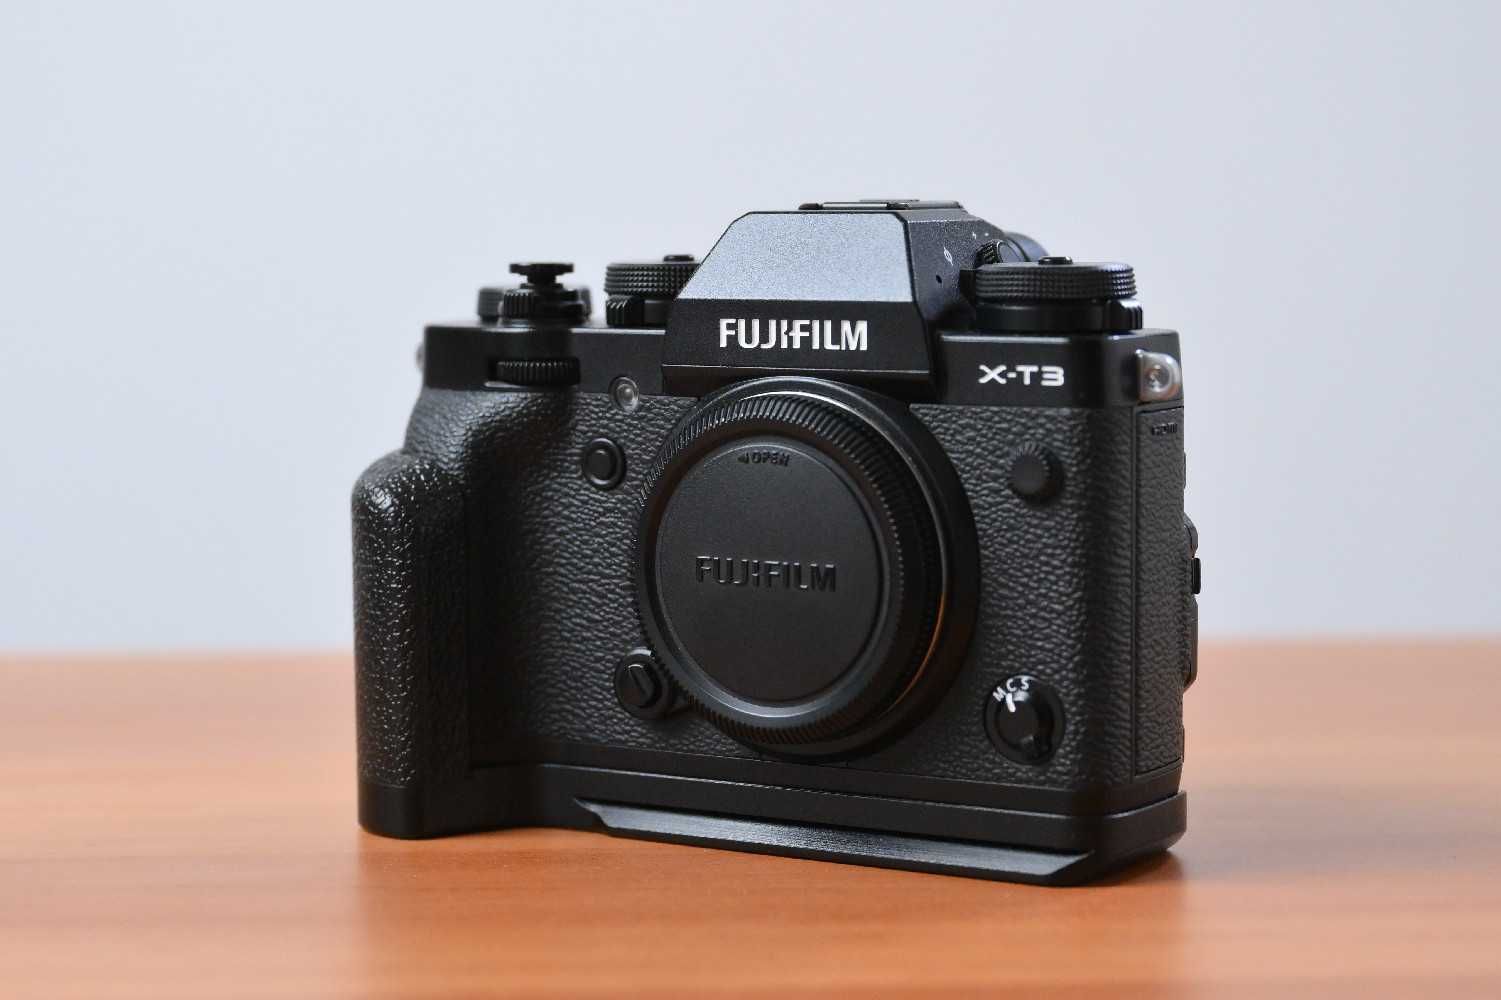 Fujifilm XT3 + Fuji baterry grip + Meike hand grip